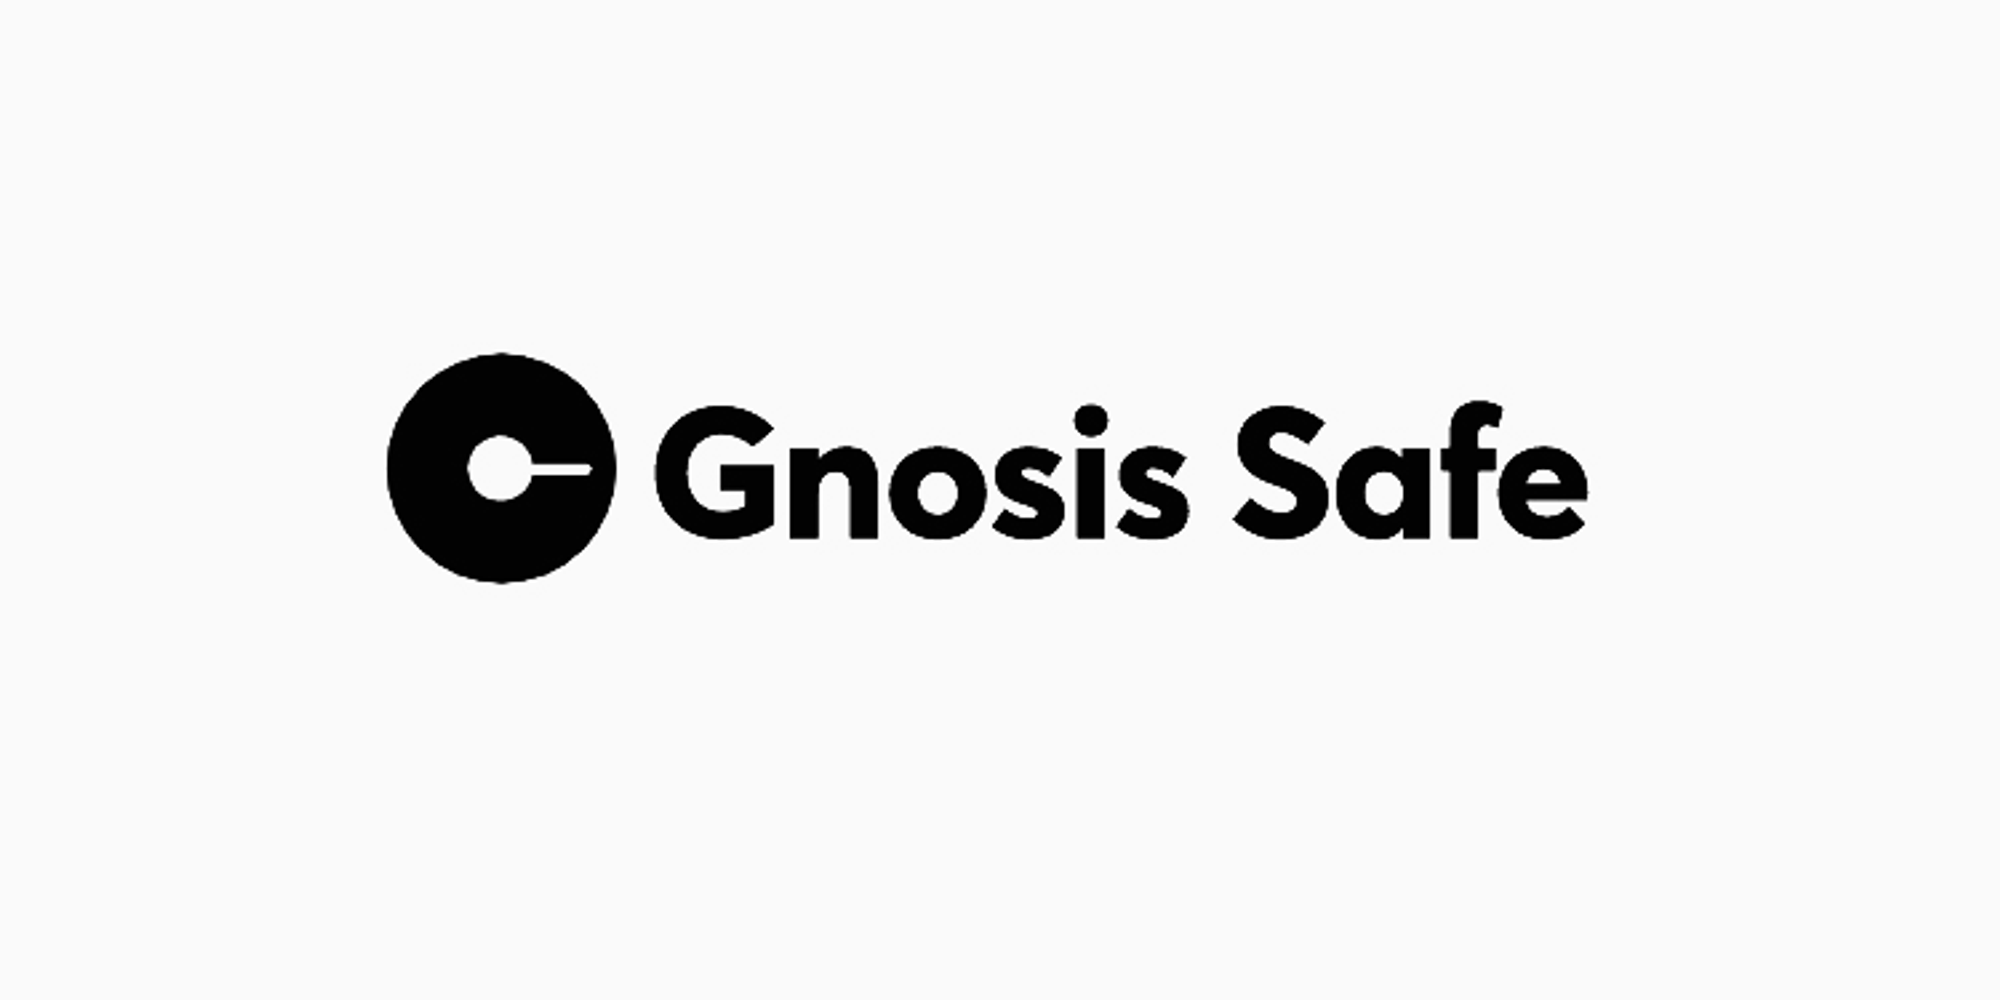 Gnosis Safe